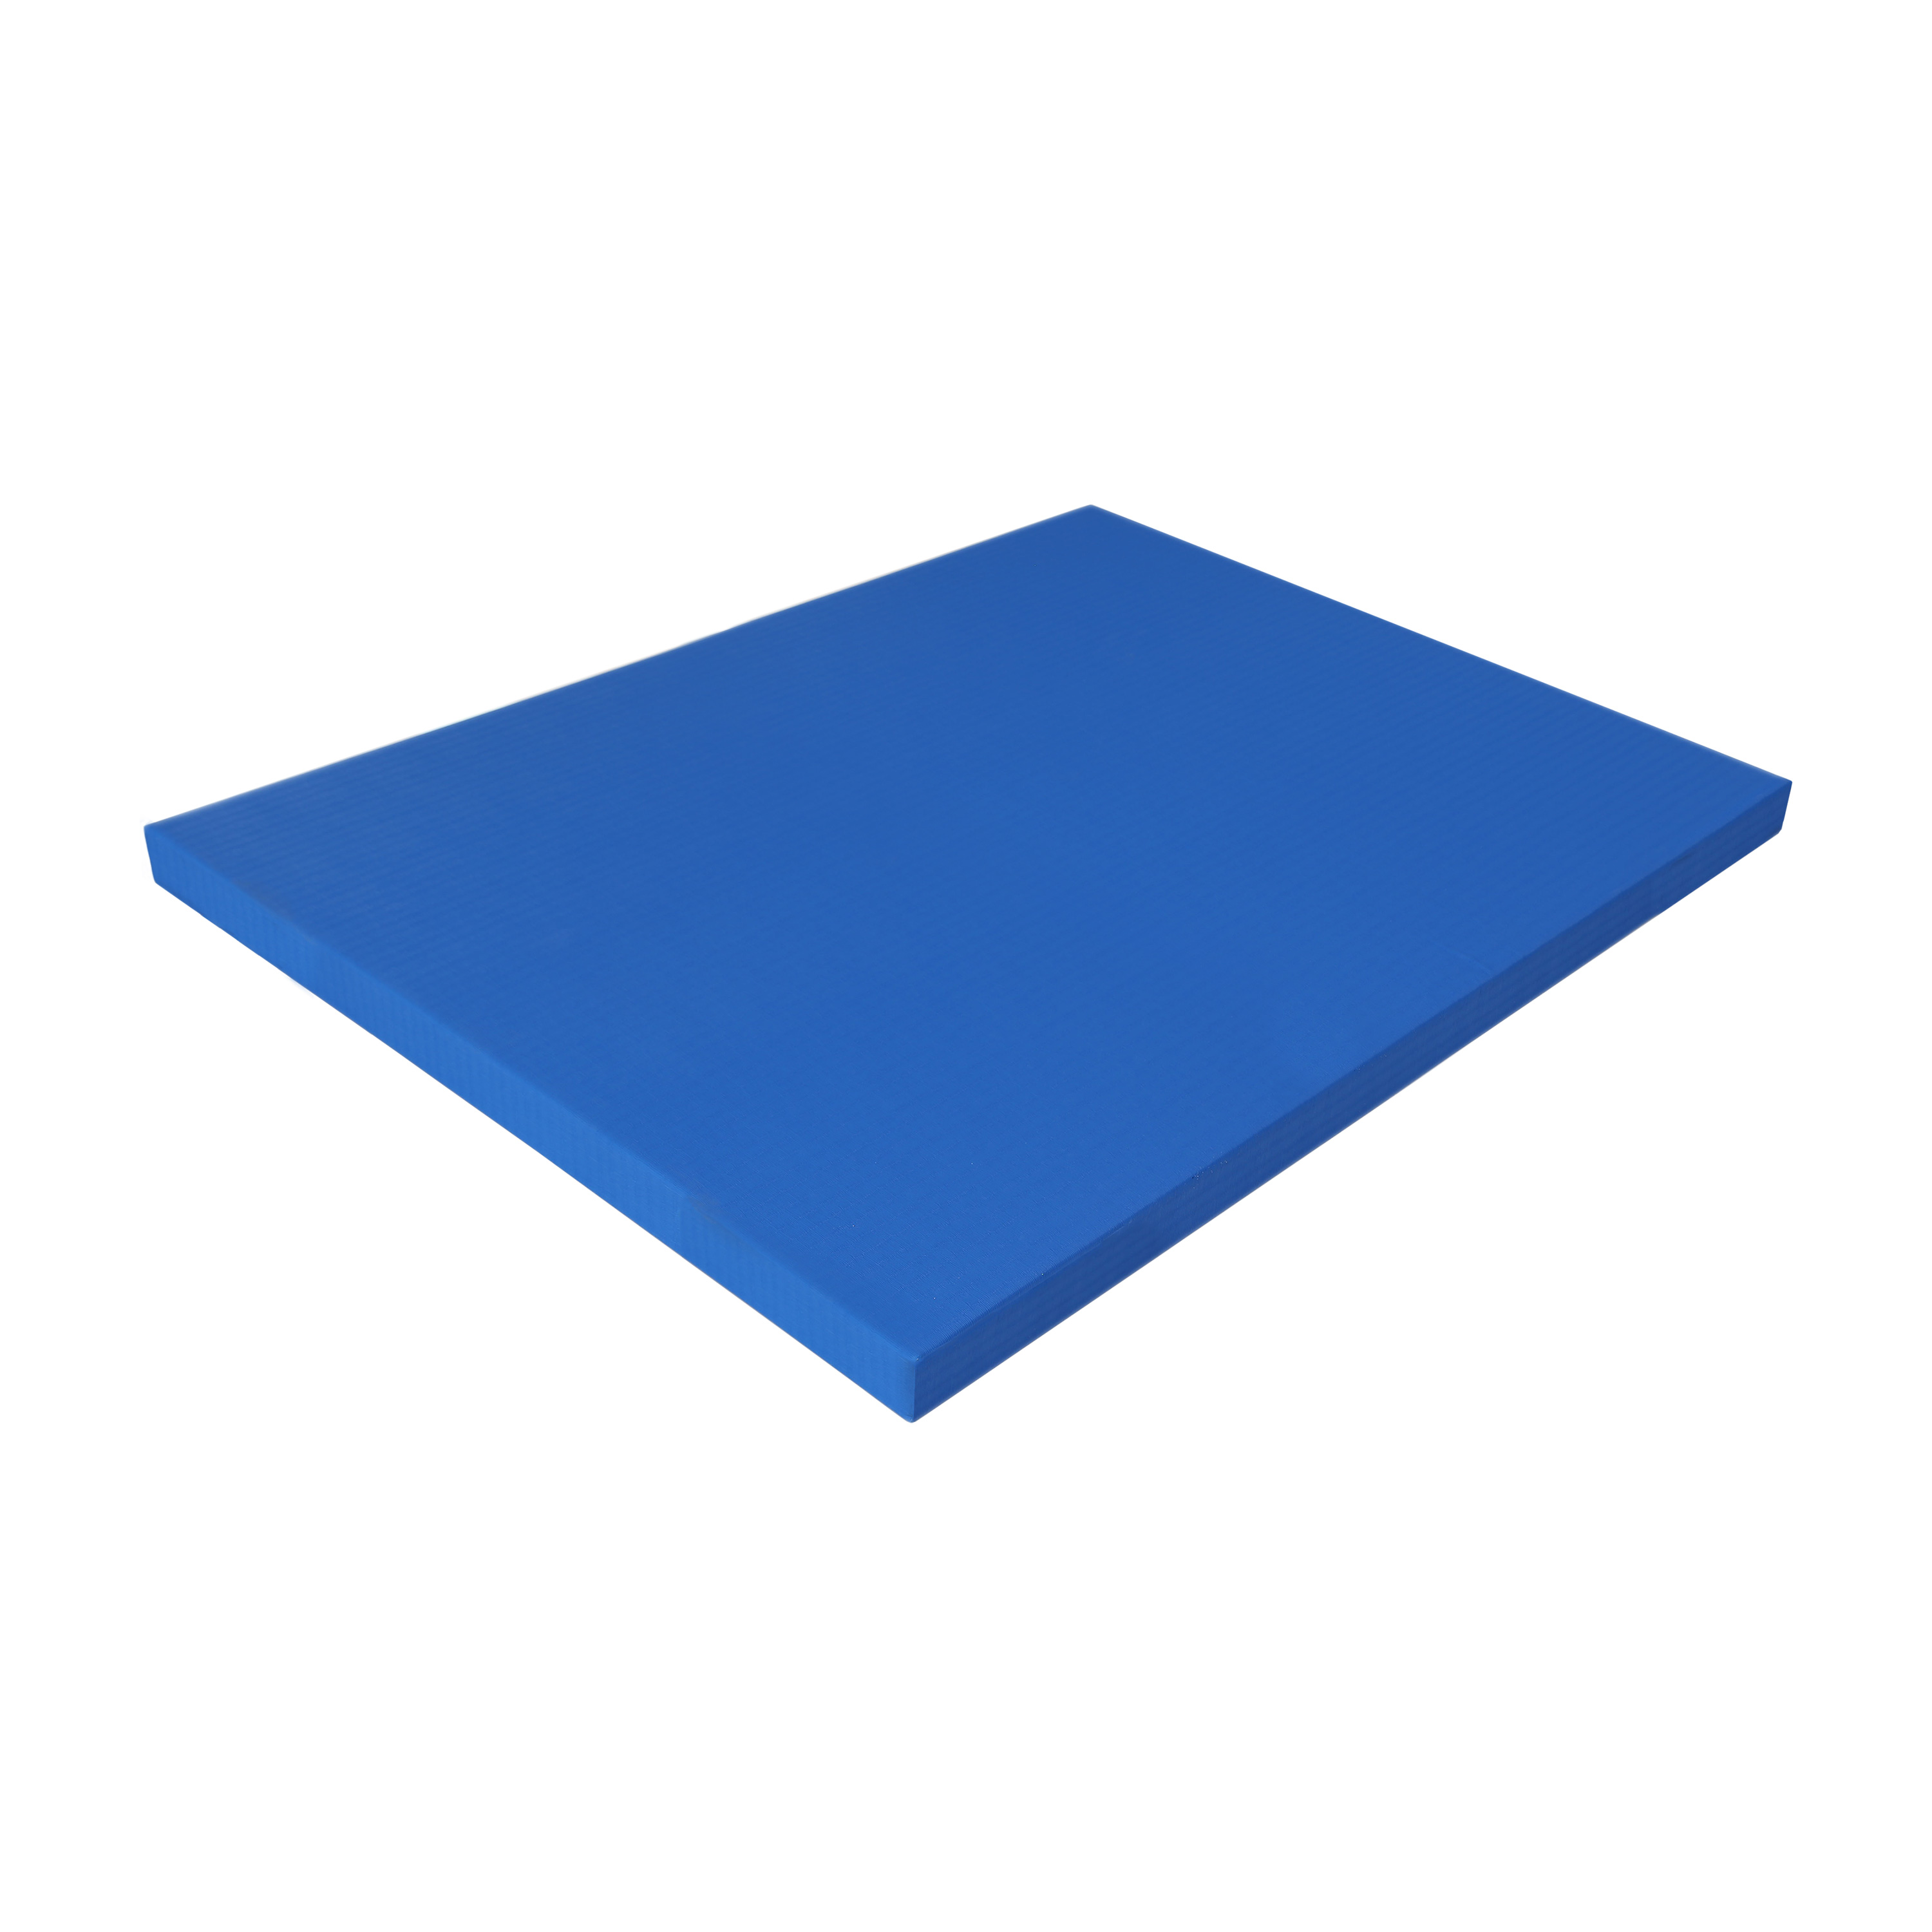 Fallschutzmatte 'Light' blau, 150 x 100 x 6 cm, 5,1 kg